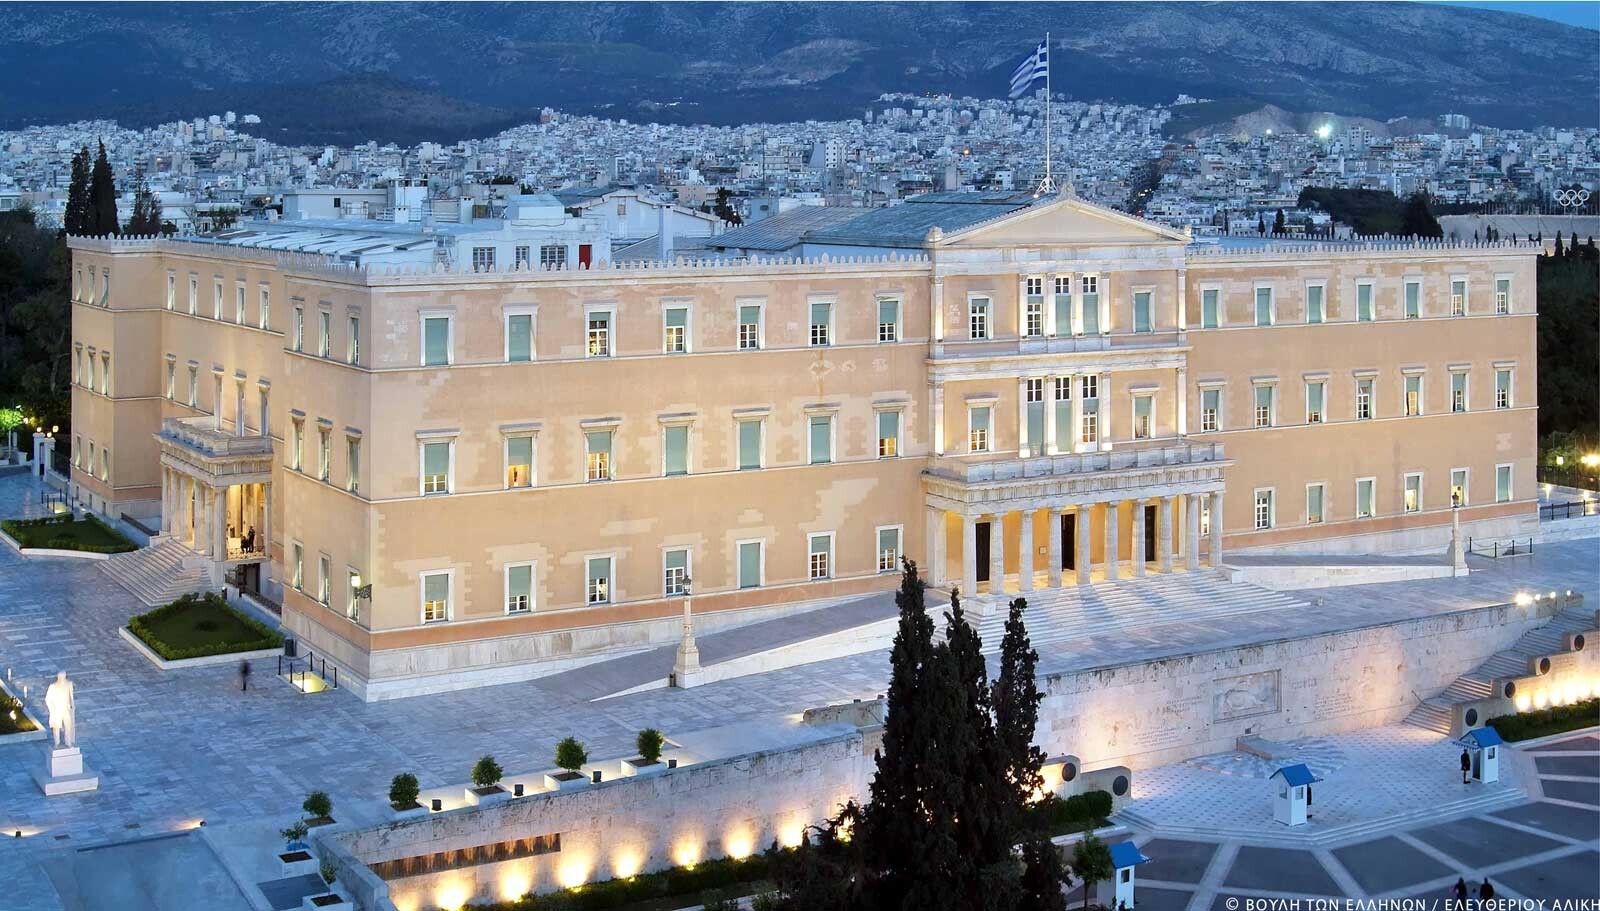 More information about "Πράσινο Ταμείο: Ενεργειακή αναβάθμιση και αποκατάσταση όψεων στην Βουλή των Ελλήνων"